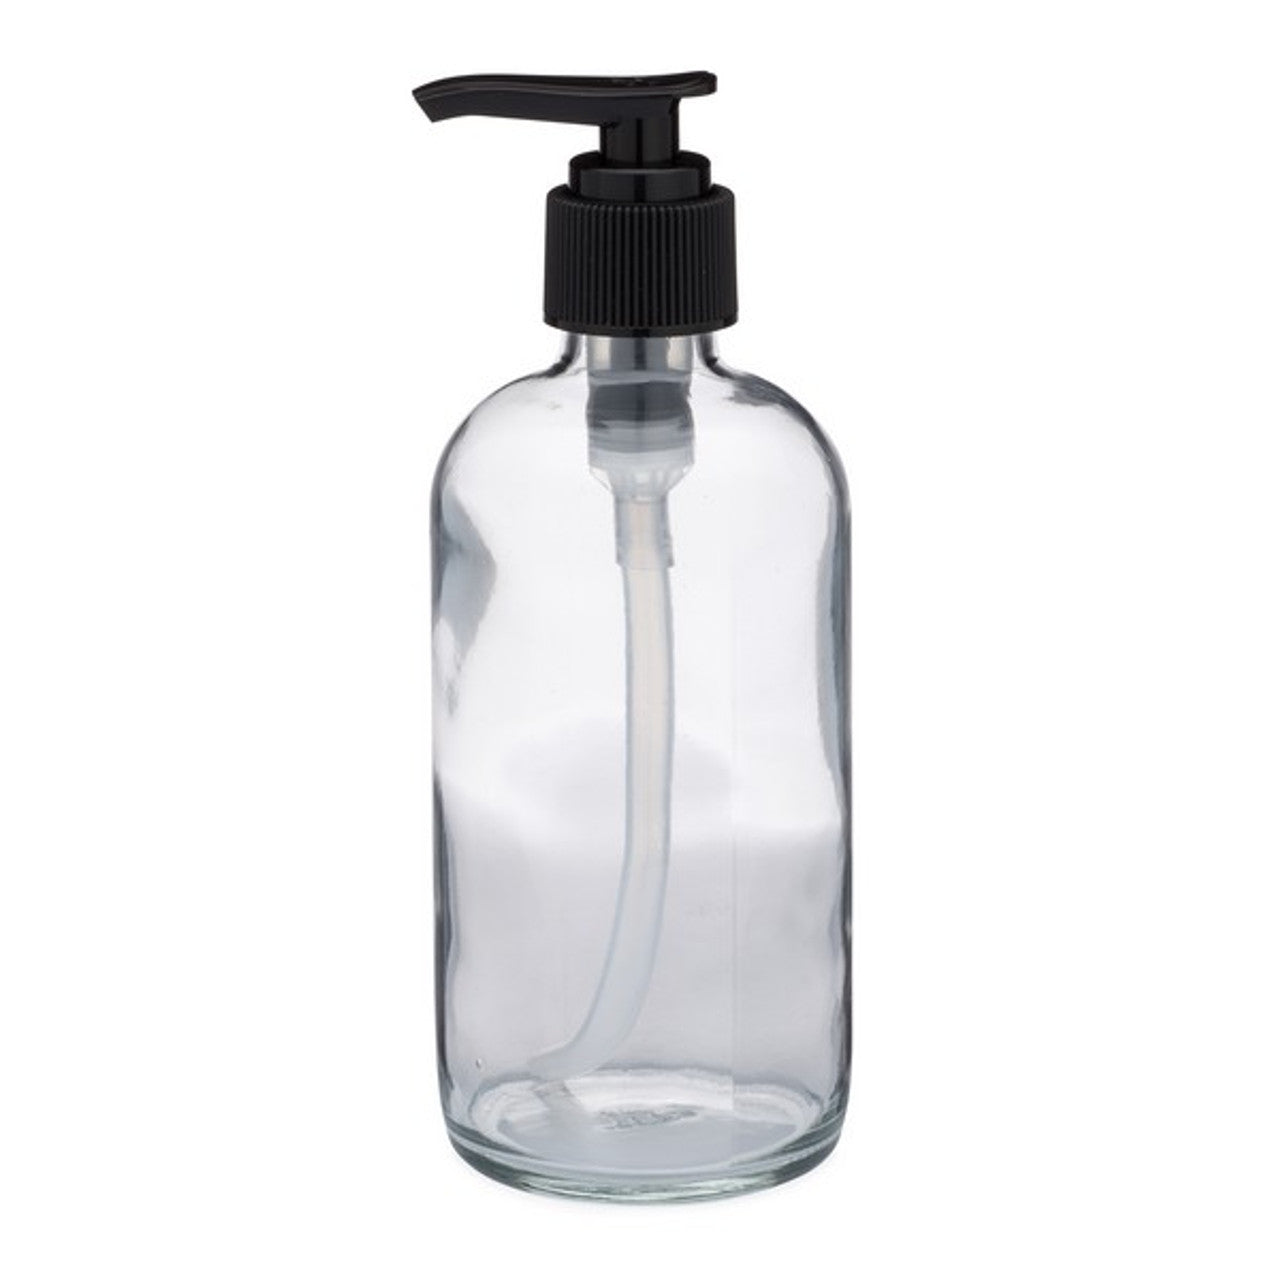 Glass 8 oz. Dispenser Bottle Black Pump